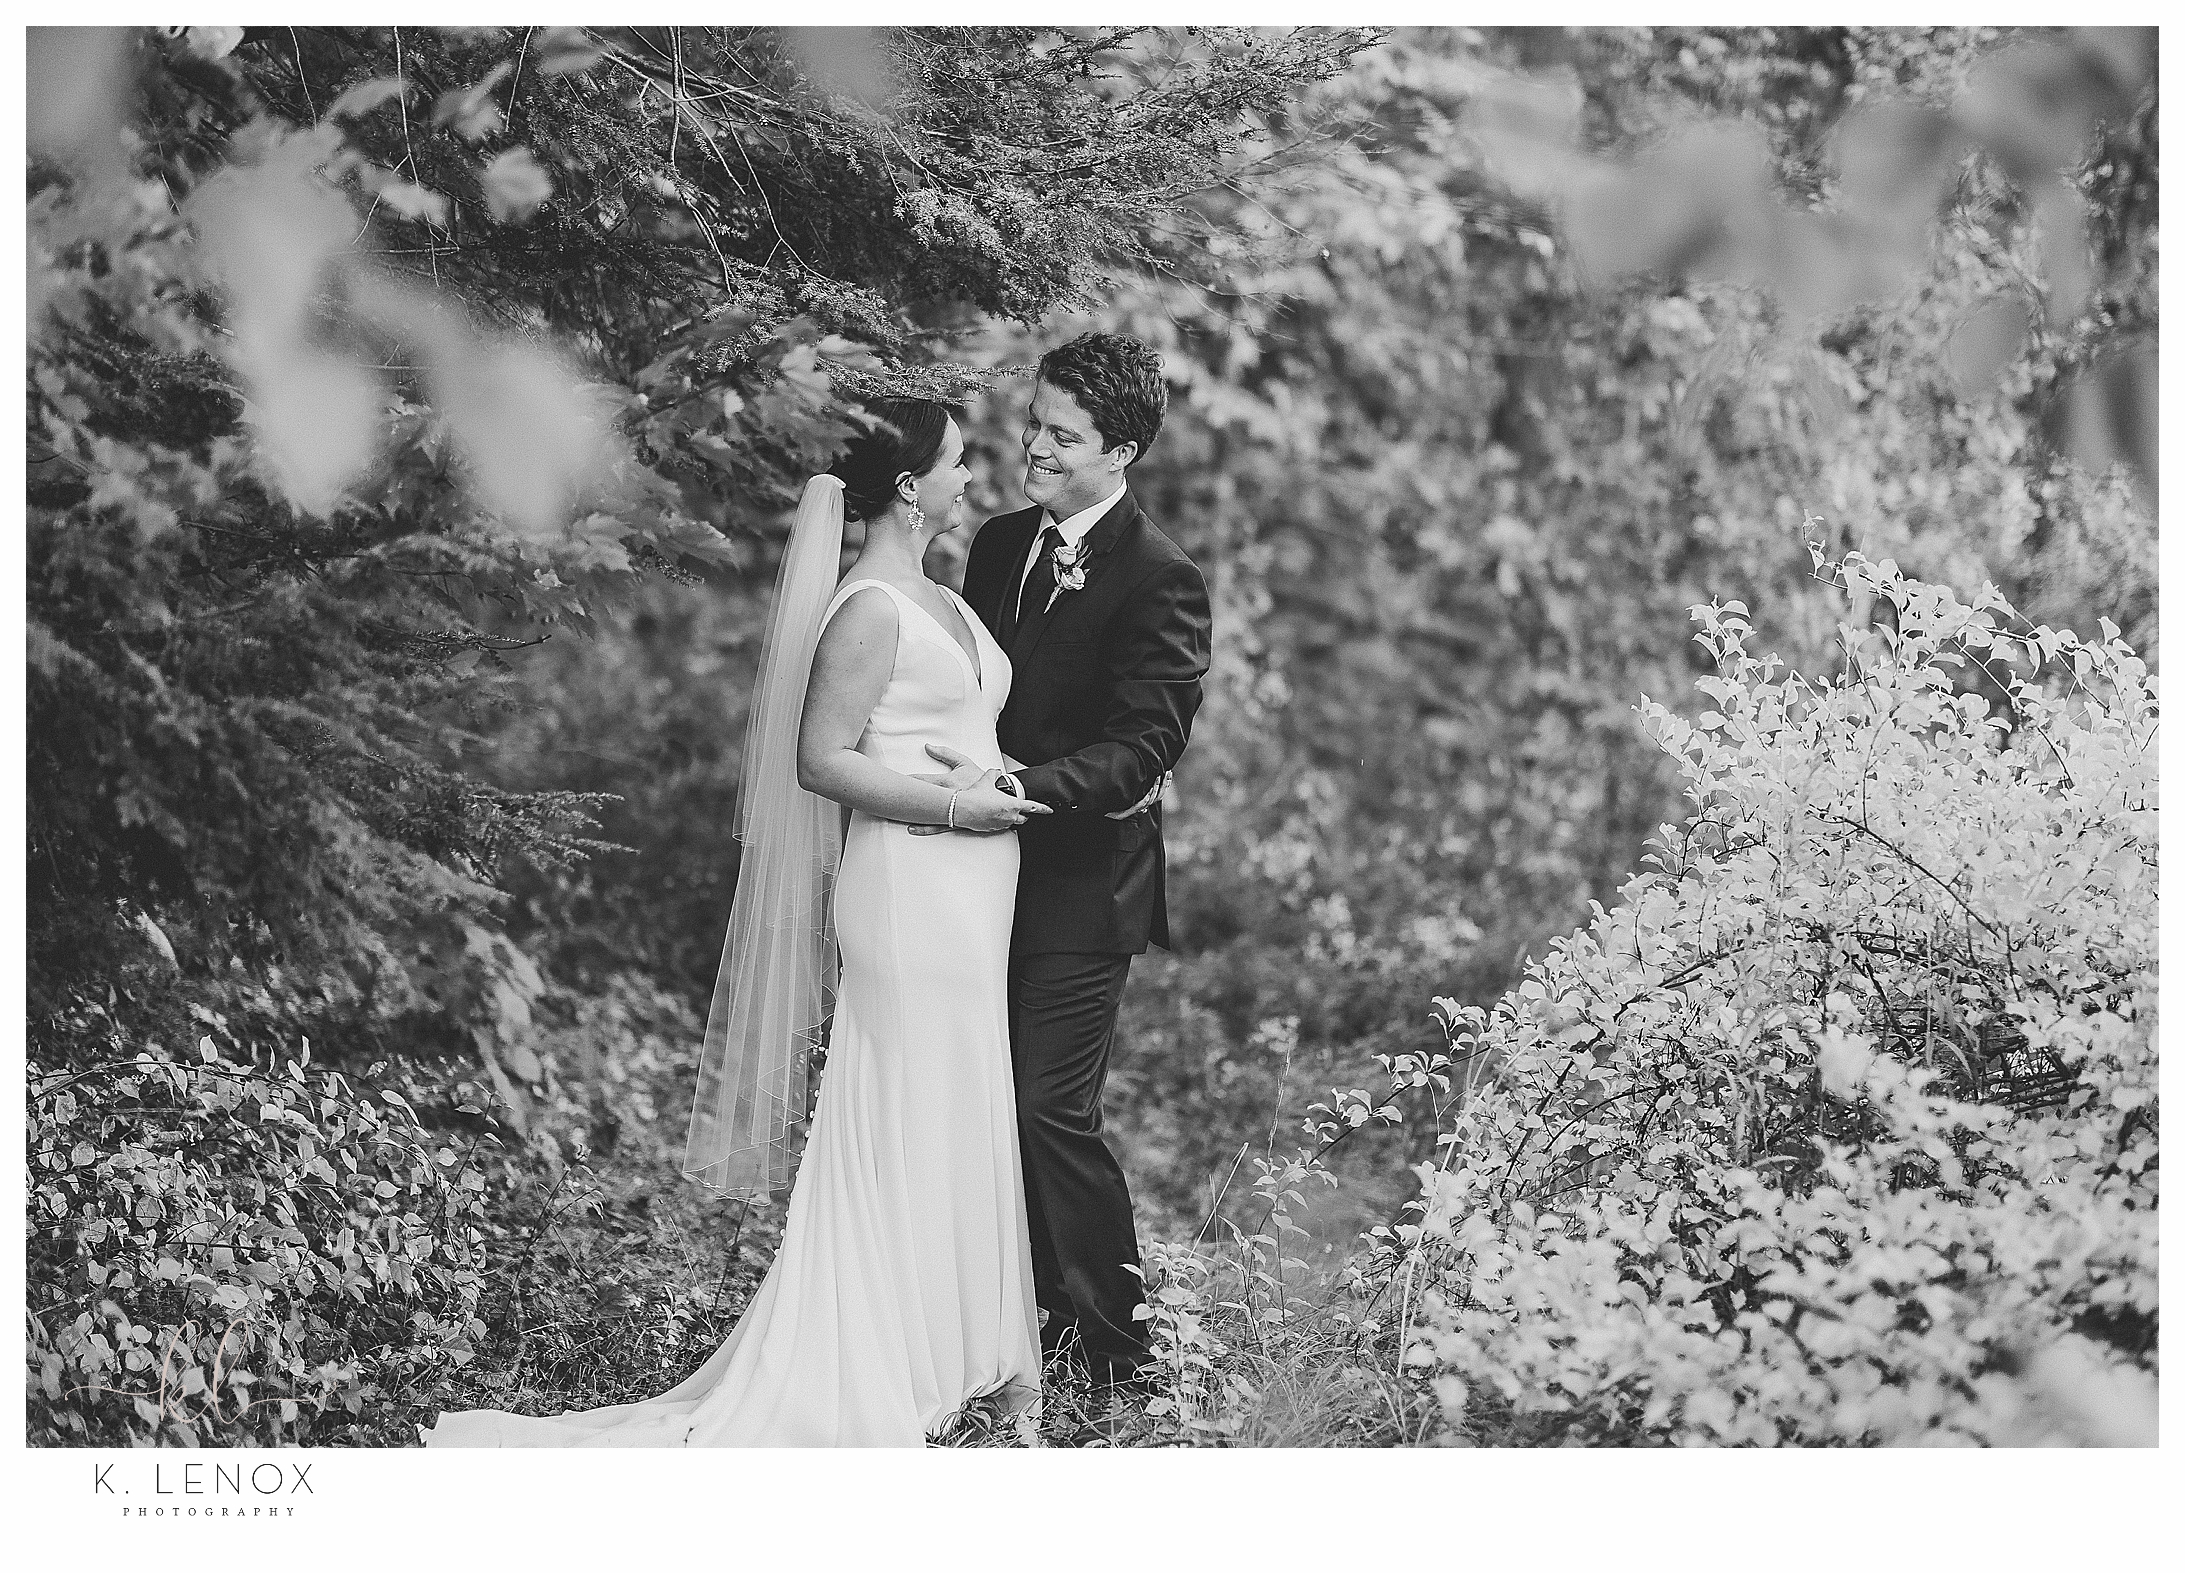 Simply Elegant Backyard Wedding- The bride and Groom